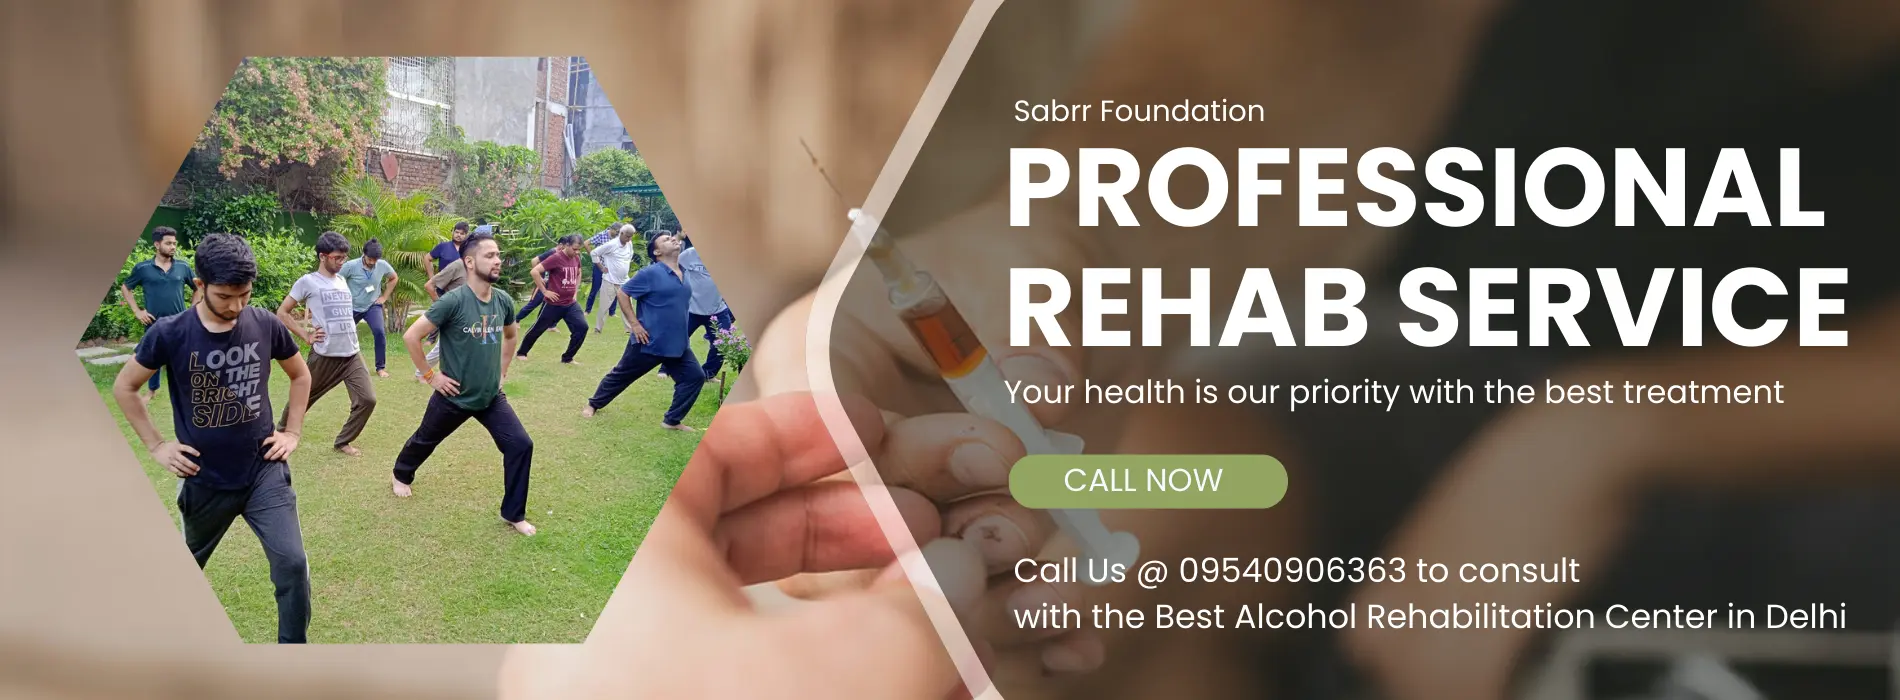 rehab centre in delhi for alcohol